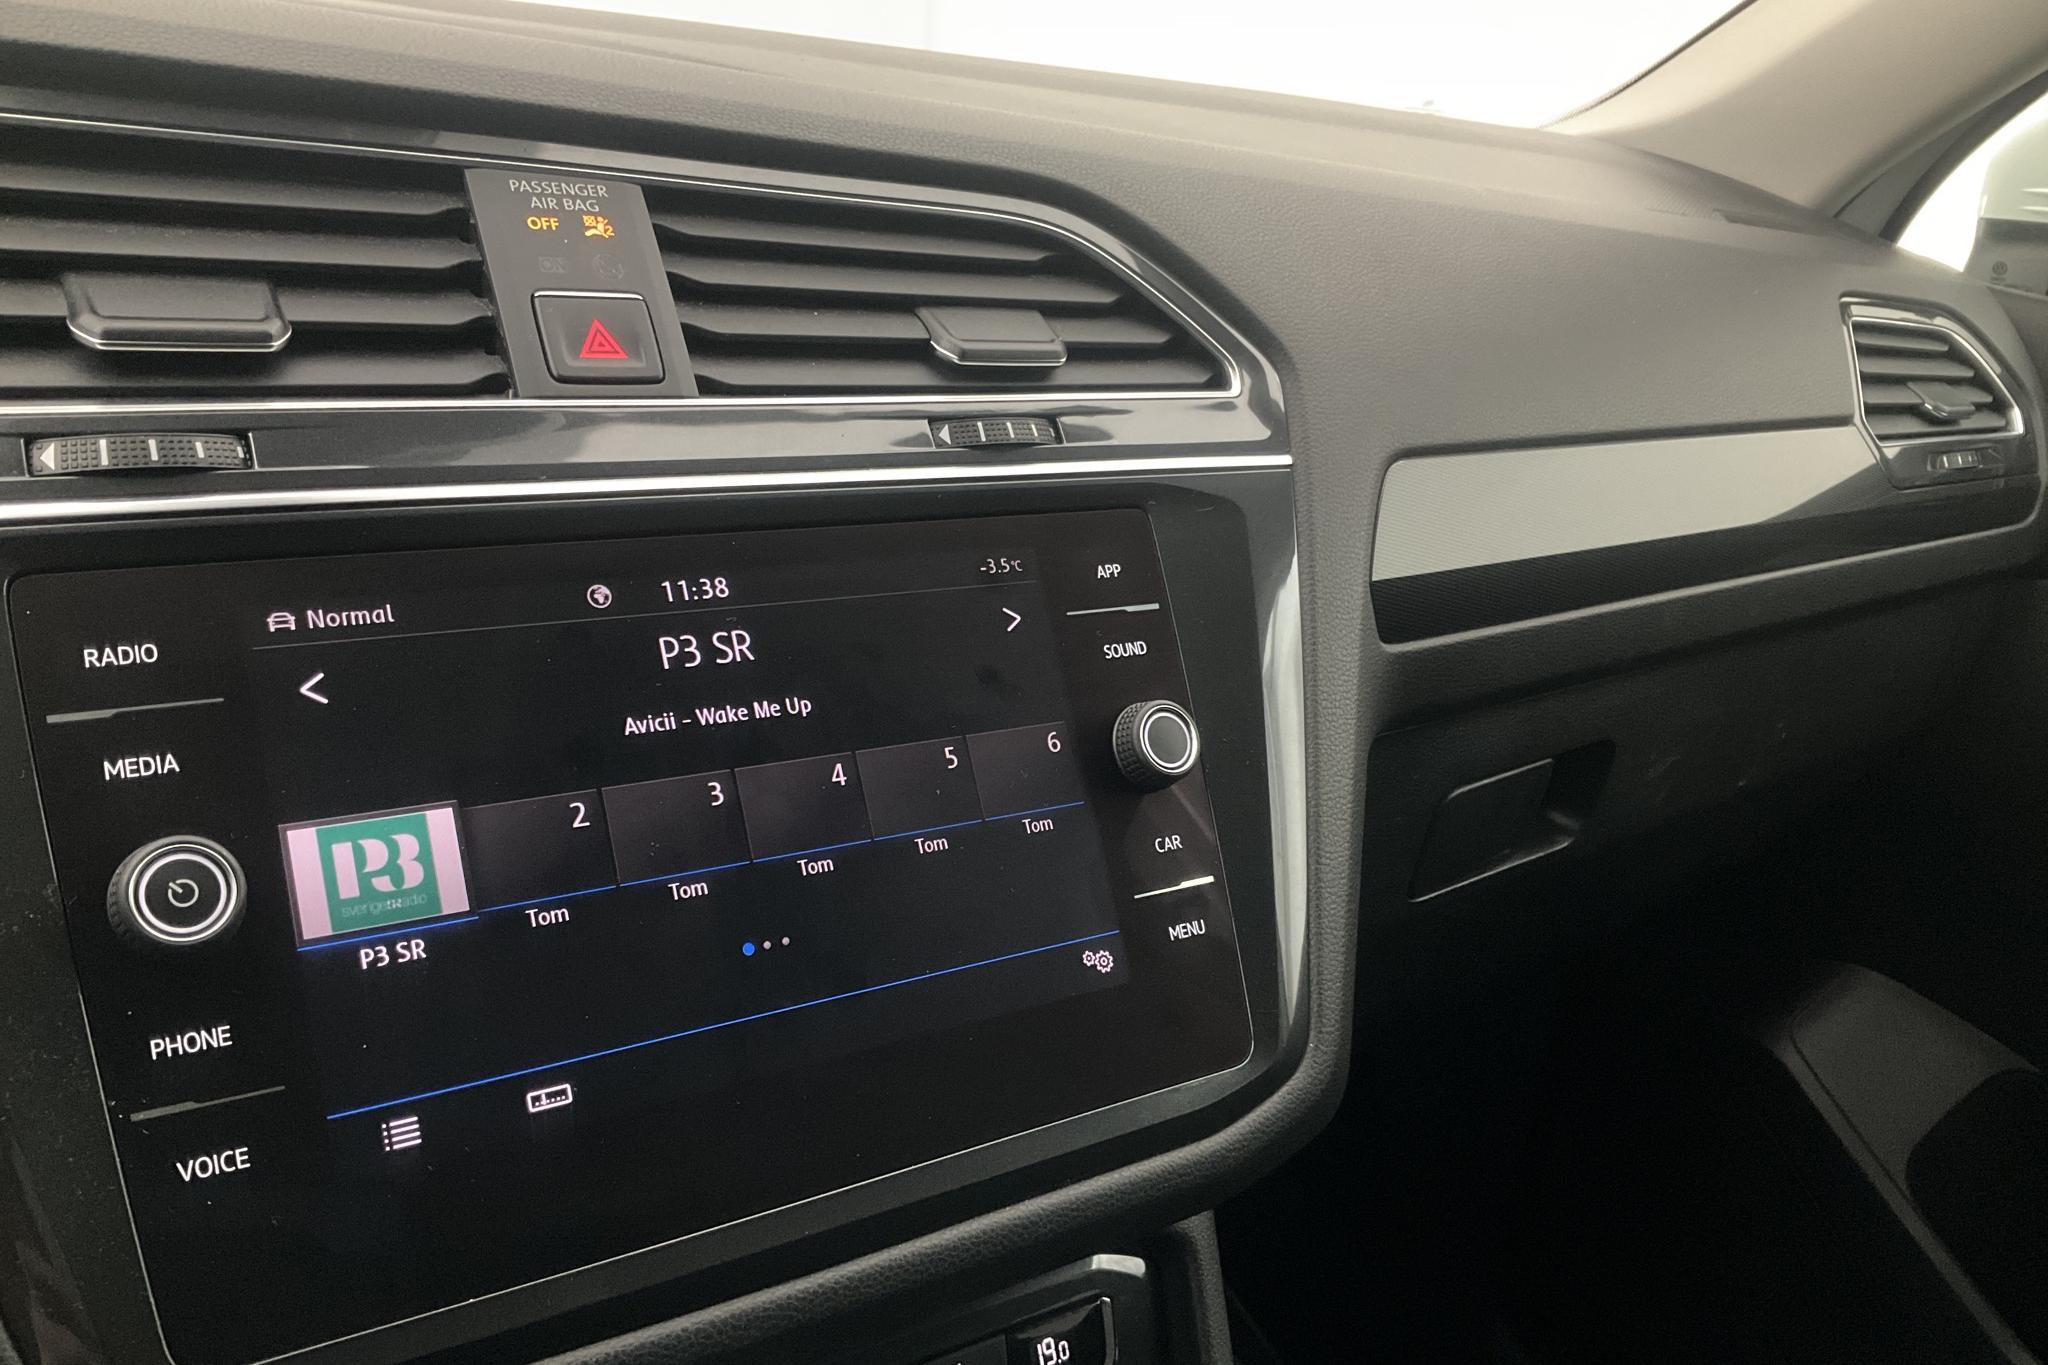 VW Tiguan Allspace 2.0 TDI 4MOTION (190hk) - 10 365 mil - Automat - vit - 2018